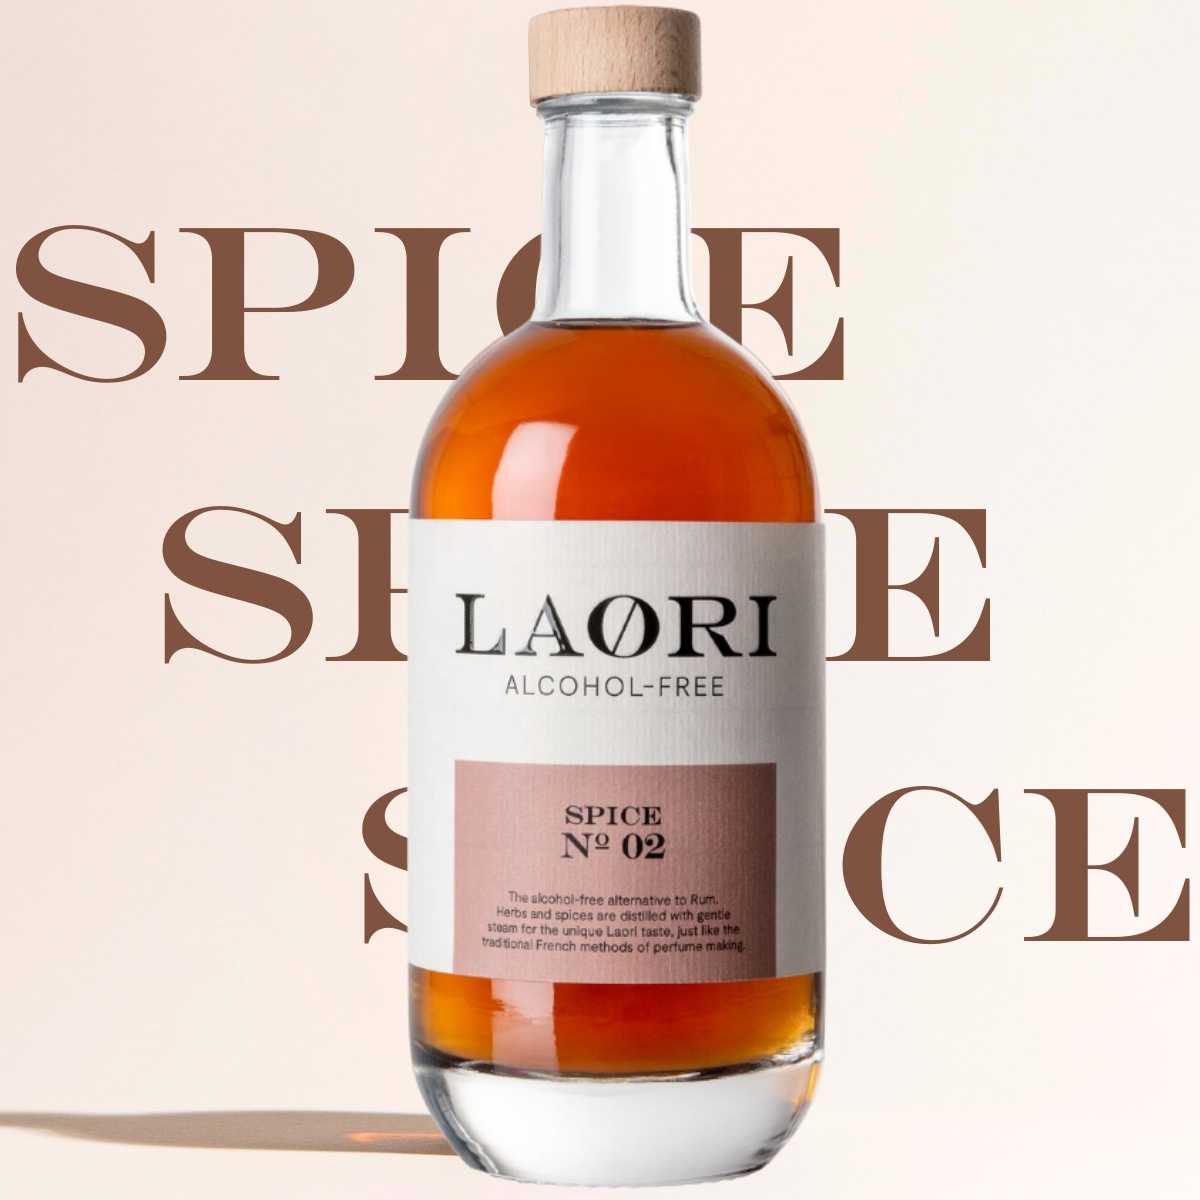 Laori Spice No 02 (0.5l)